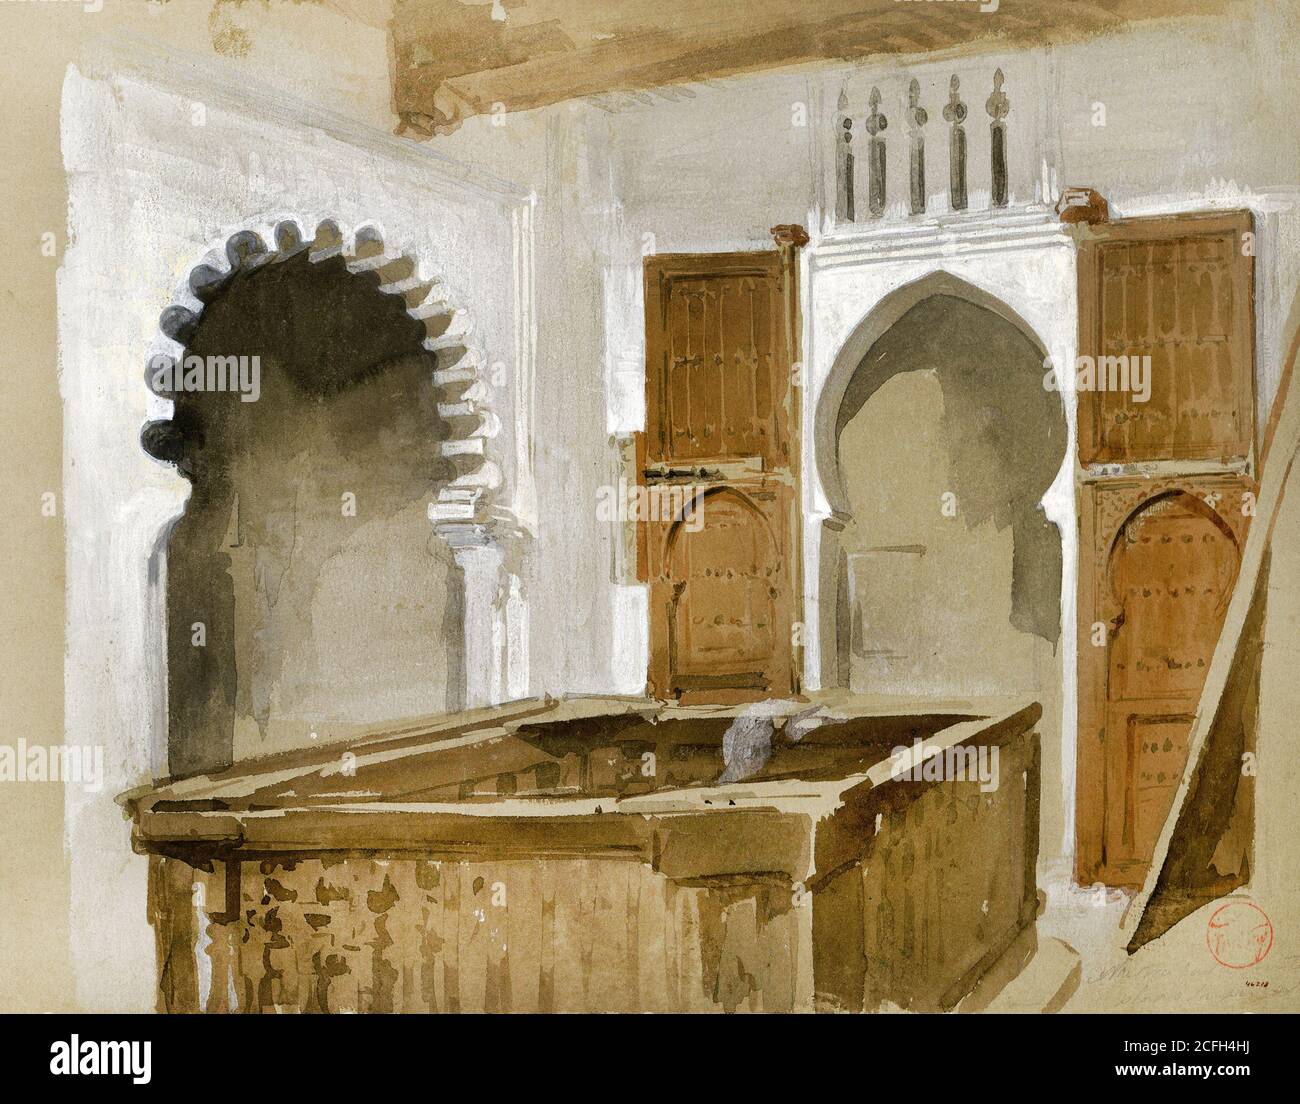 Maria Fortuny, nuestra Casa en Tetuán 1860 acuarela y gouache sobre papel, Museu Nacional d'Art de Catalunya, Barcelona, España. Foto de stock